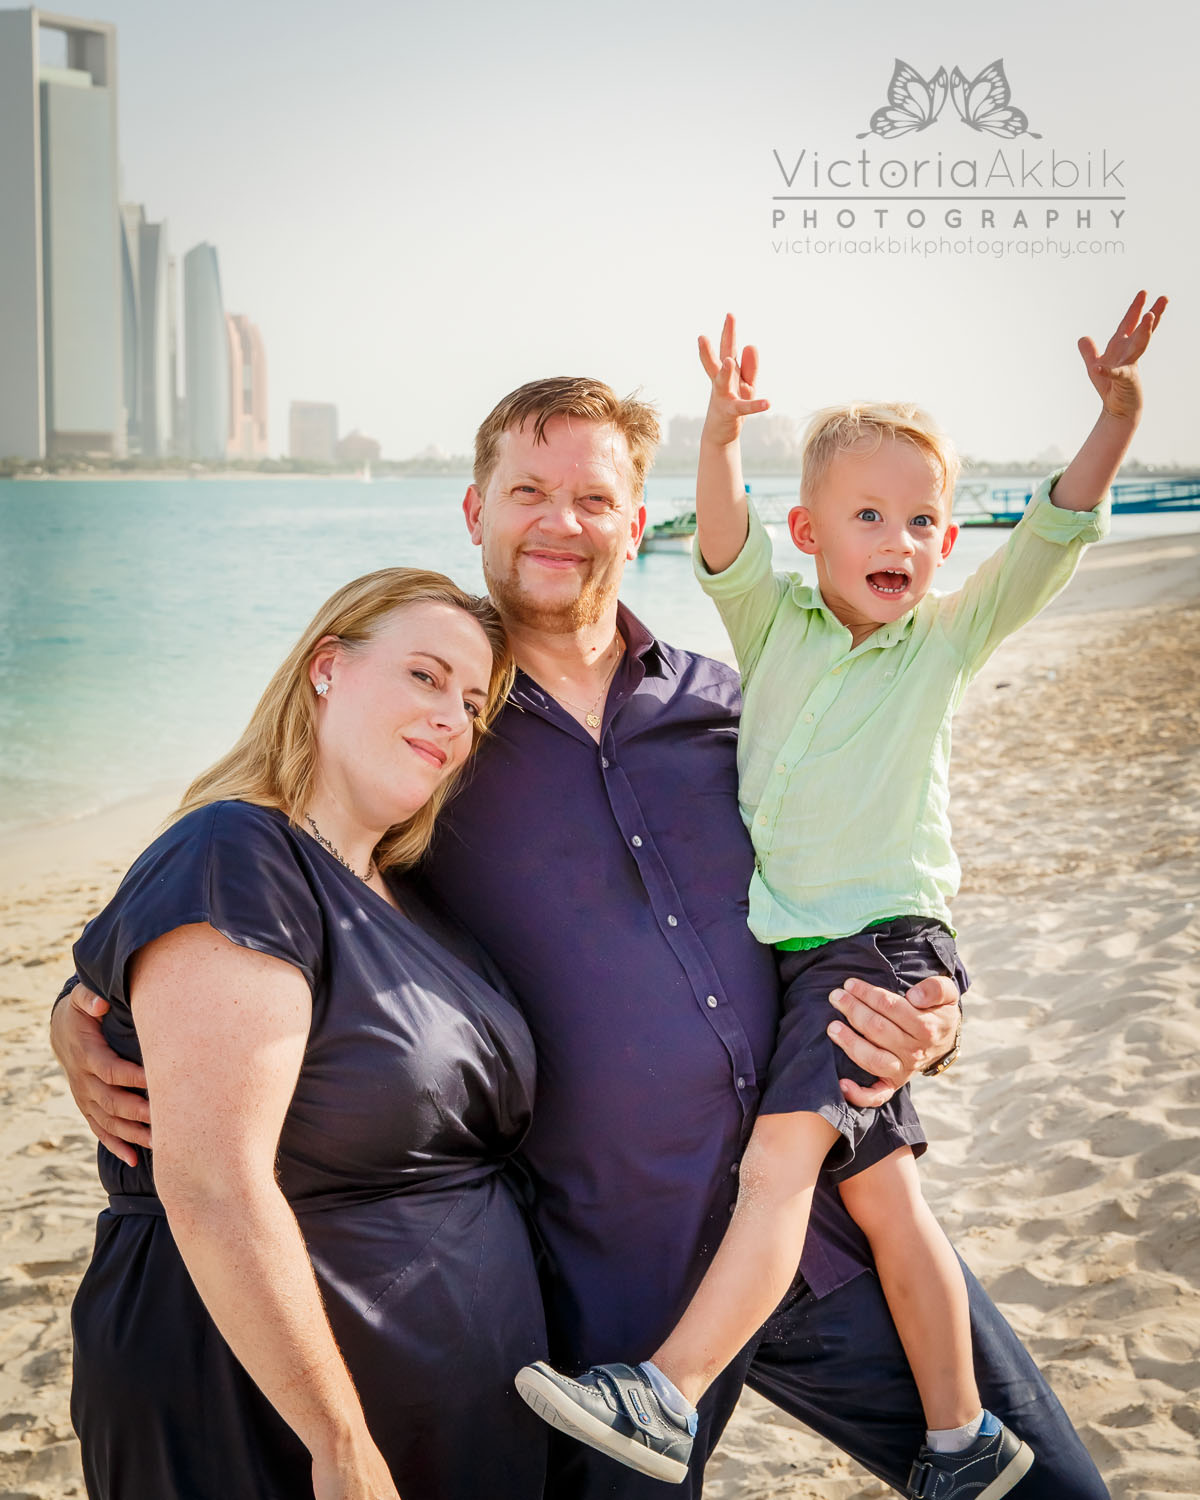 Mrs B’s Family Photo Shoot | Abu Dhabi Lifestyle Family Photography » Victoria Akbik Photography